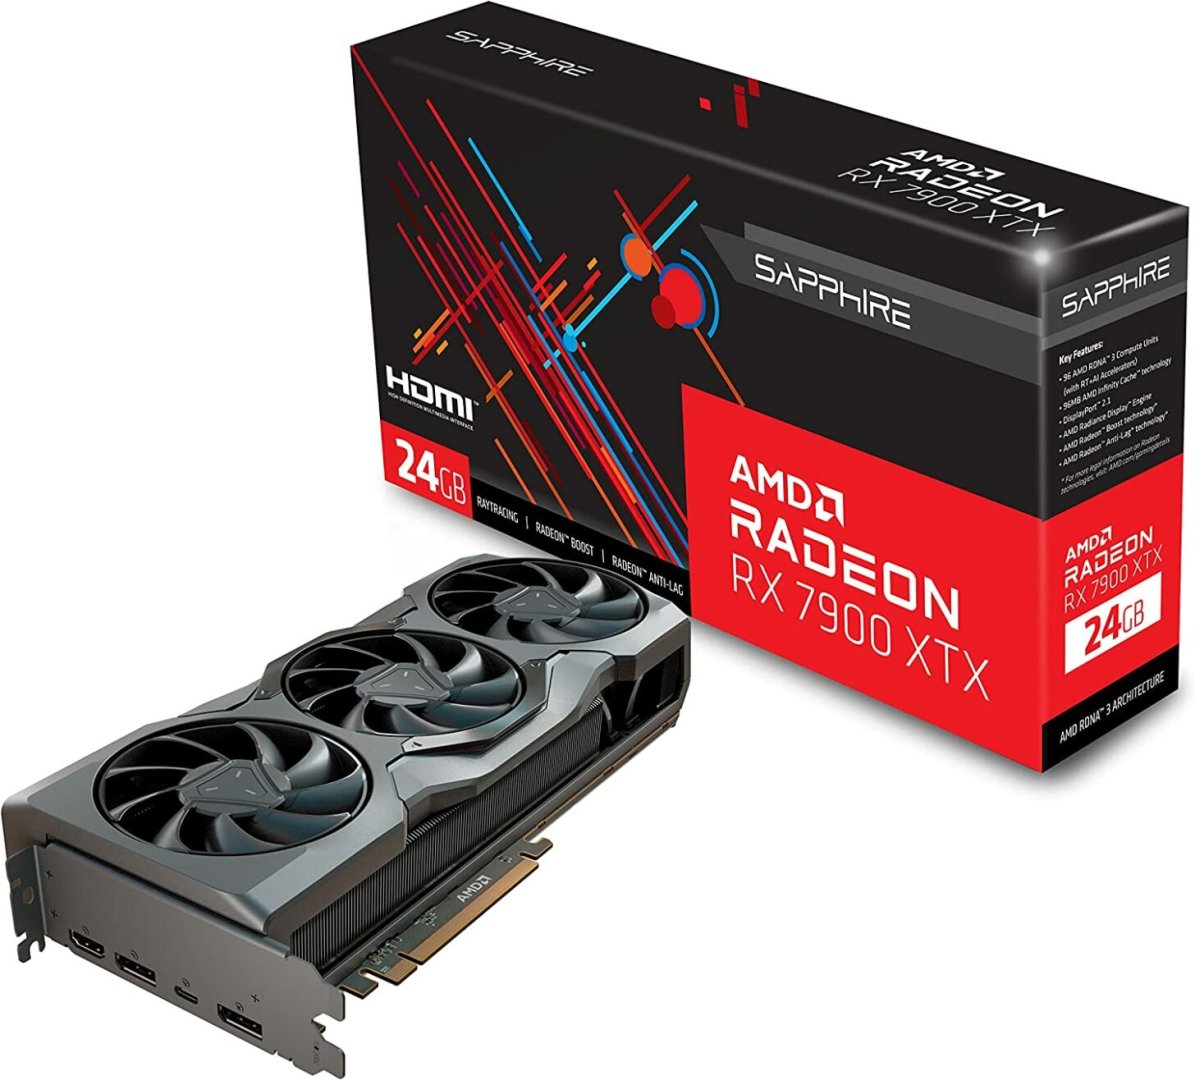 Sapphire-AMD-Radeon-RX-7900-XTX-20-GB-Graphics-Card-_1-1456x1316.jpg